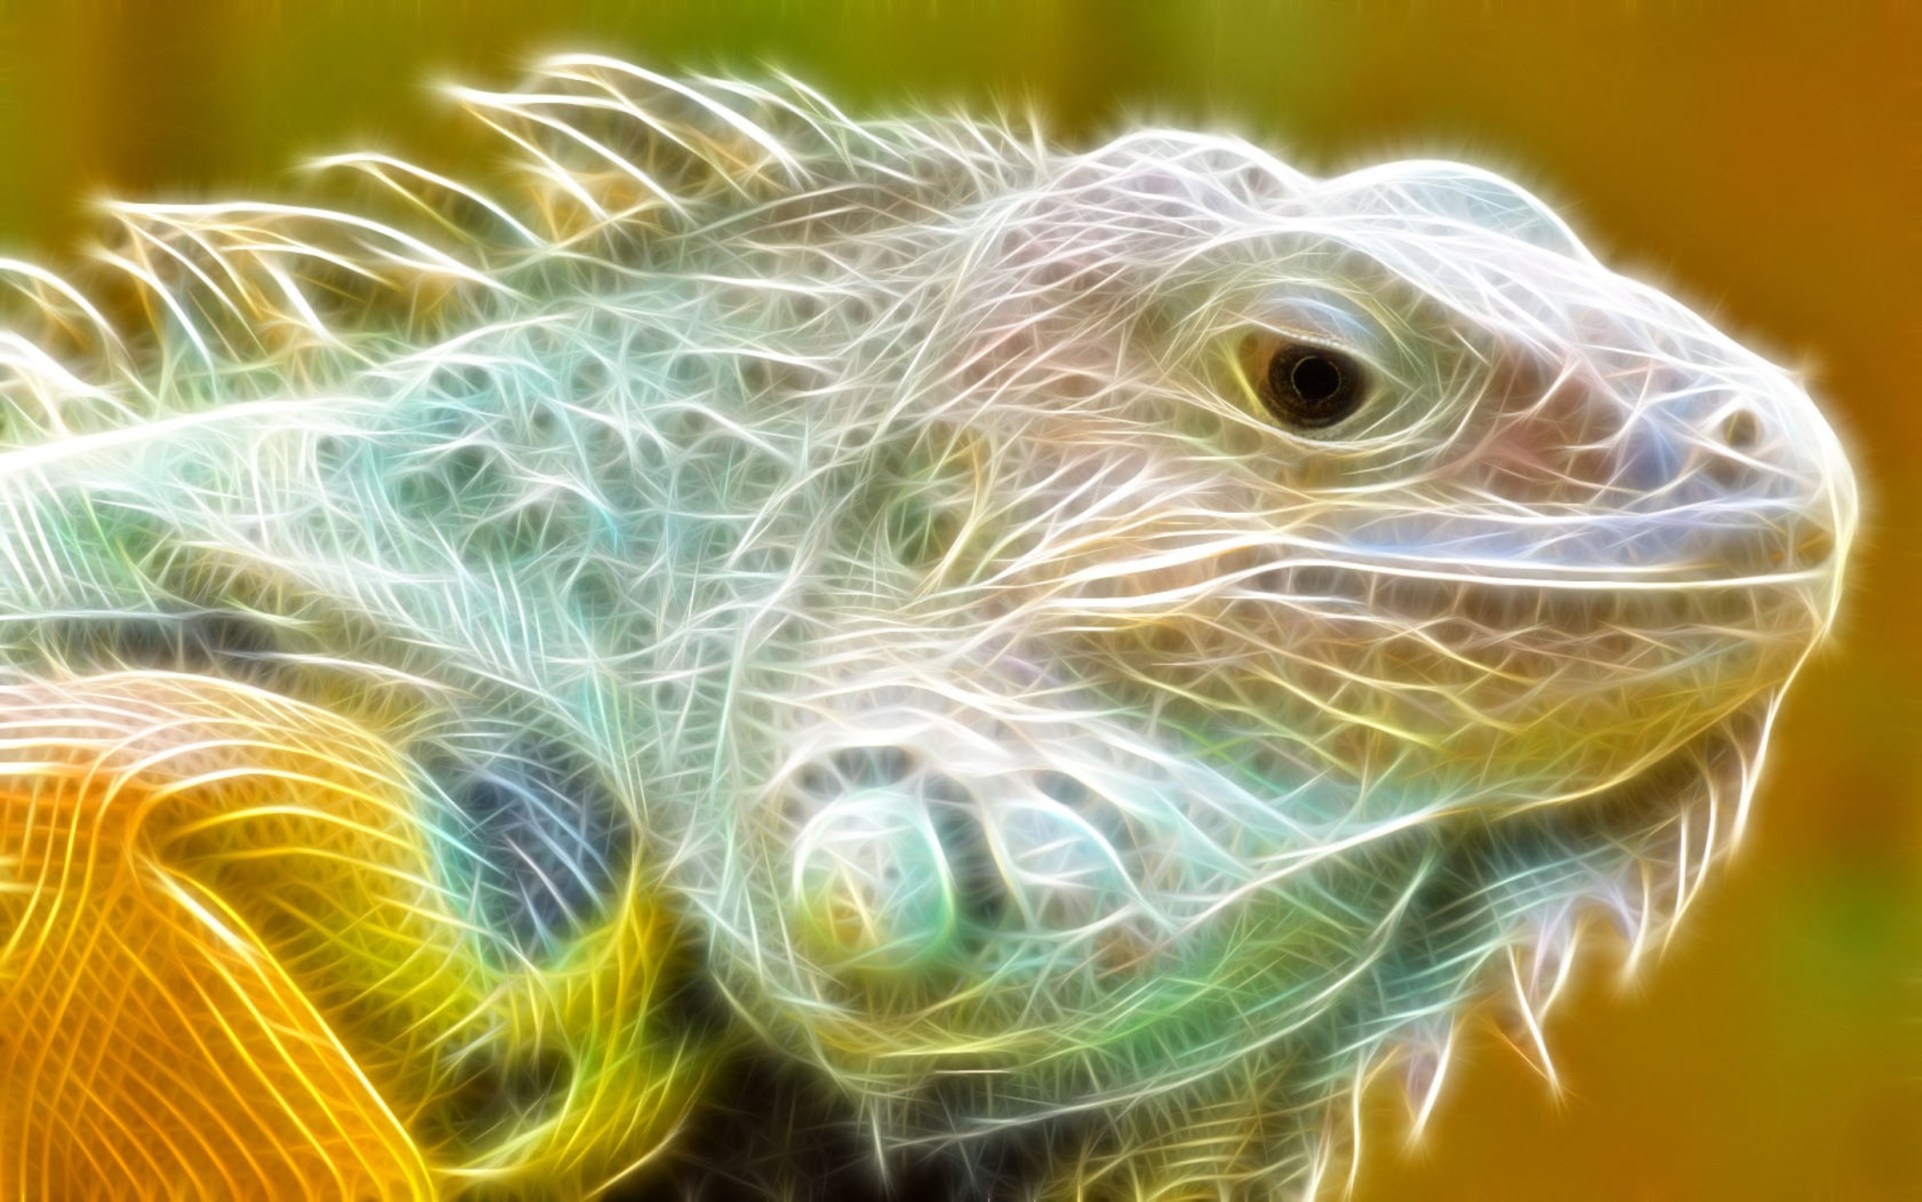 Descarga gratuita de fondo de pantalla para móvil de Animales, Reptiles, Iguana.